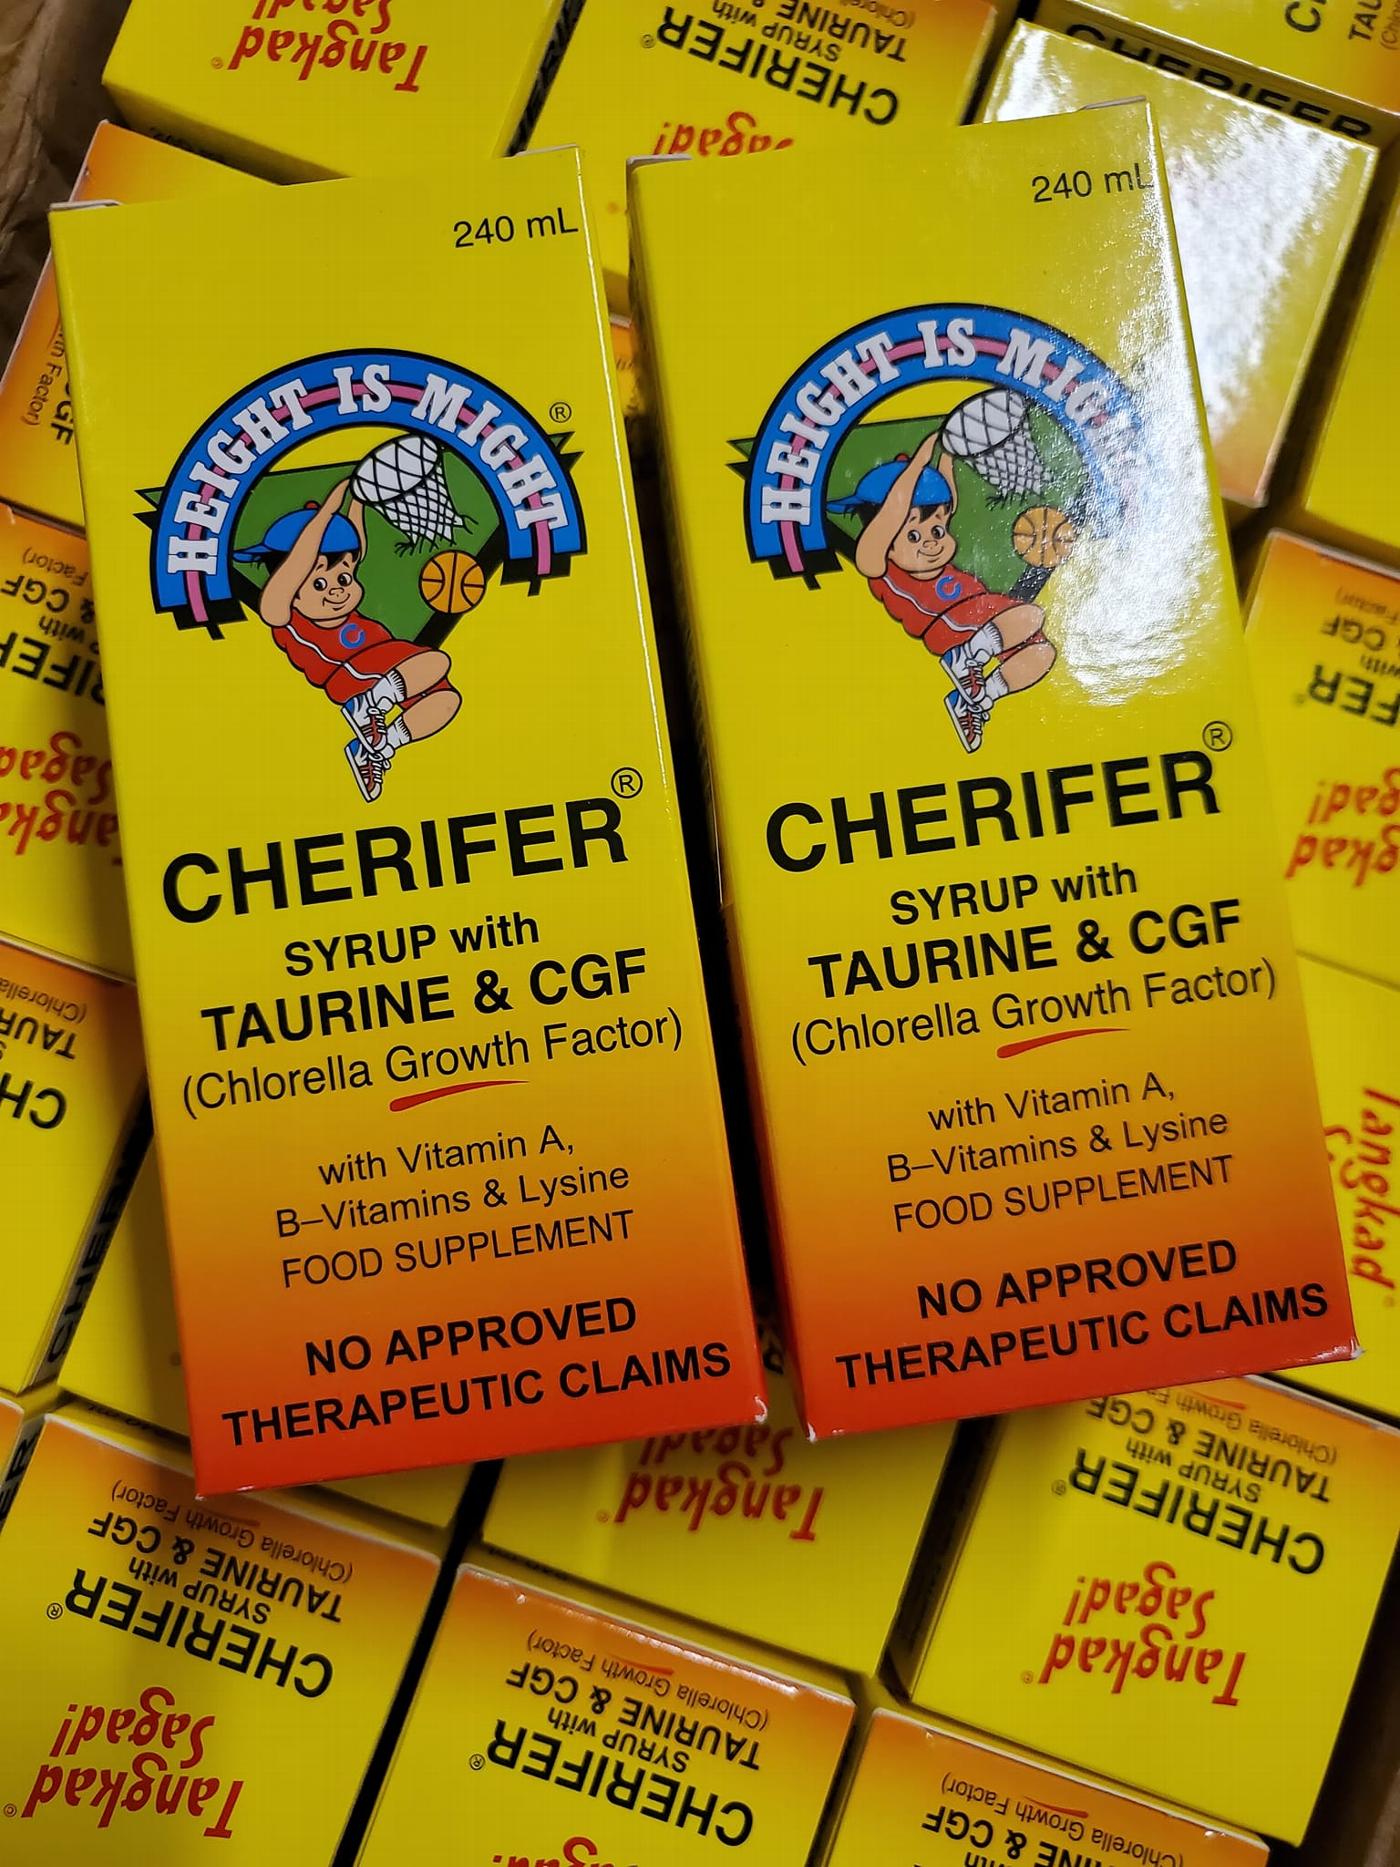 Cherifer Syrup With Taurine & CGF Vit A,B & Lysine Food Supplement  240ml